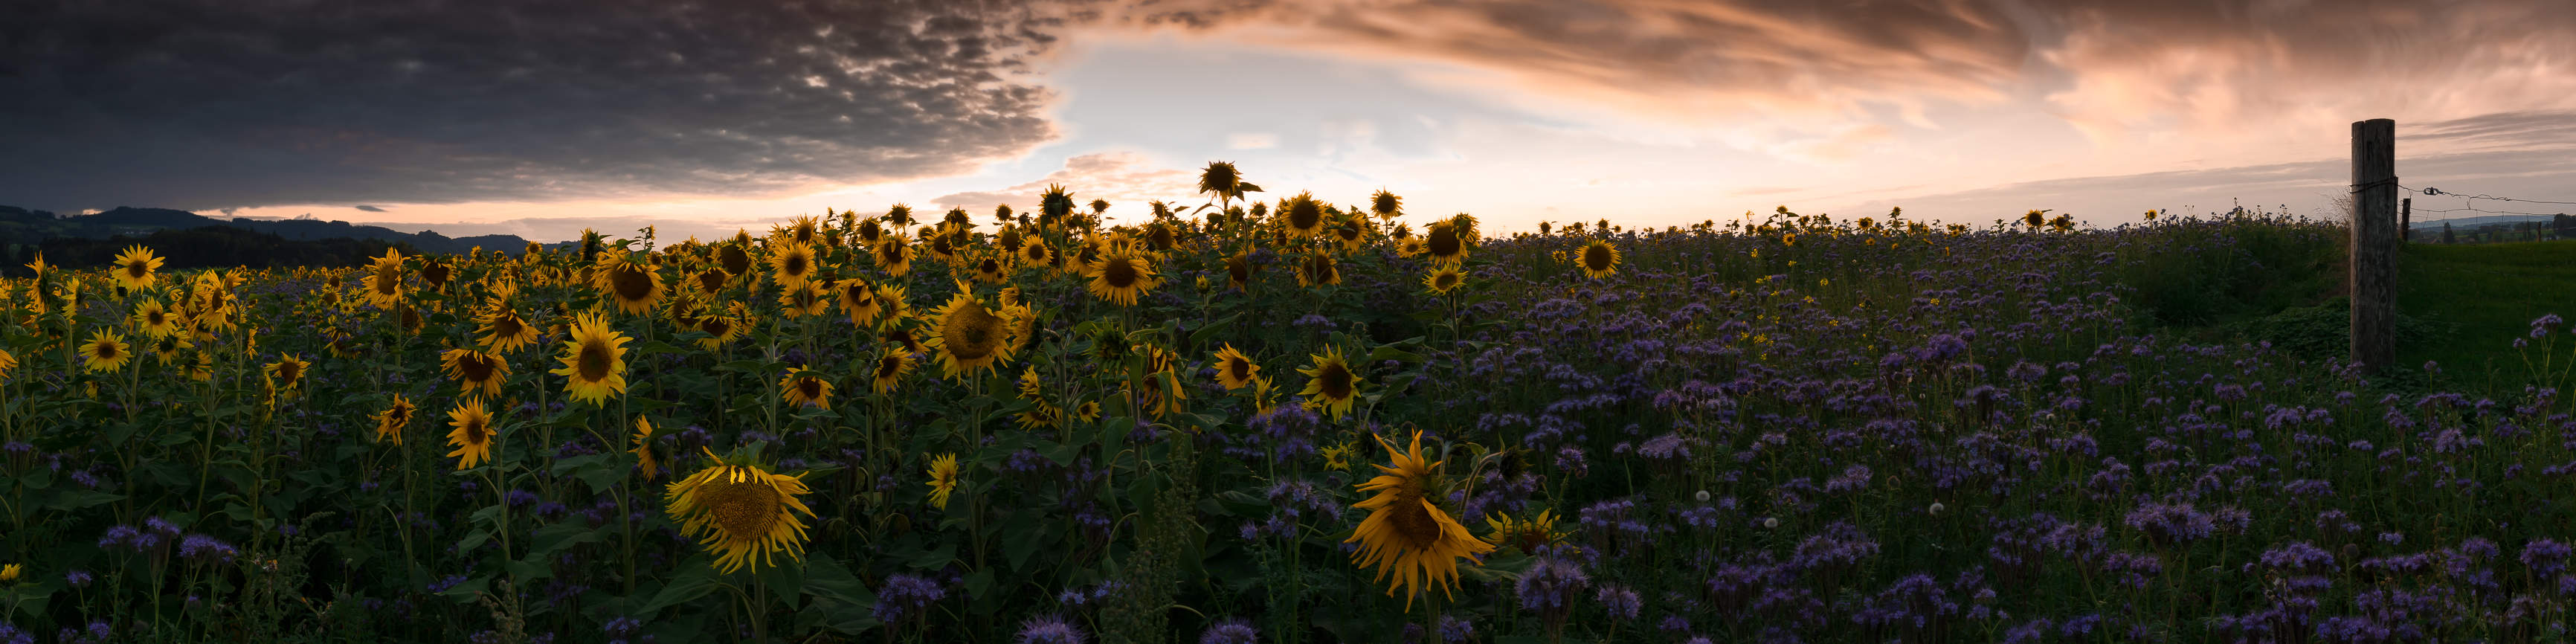 Sonnenblumenfeld entlang dem Bodensee, abends,
Pano 4:1